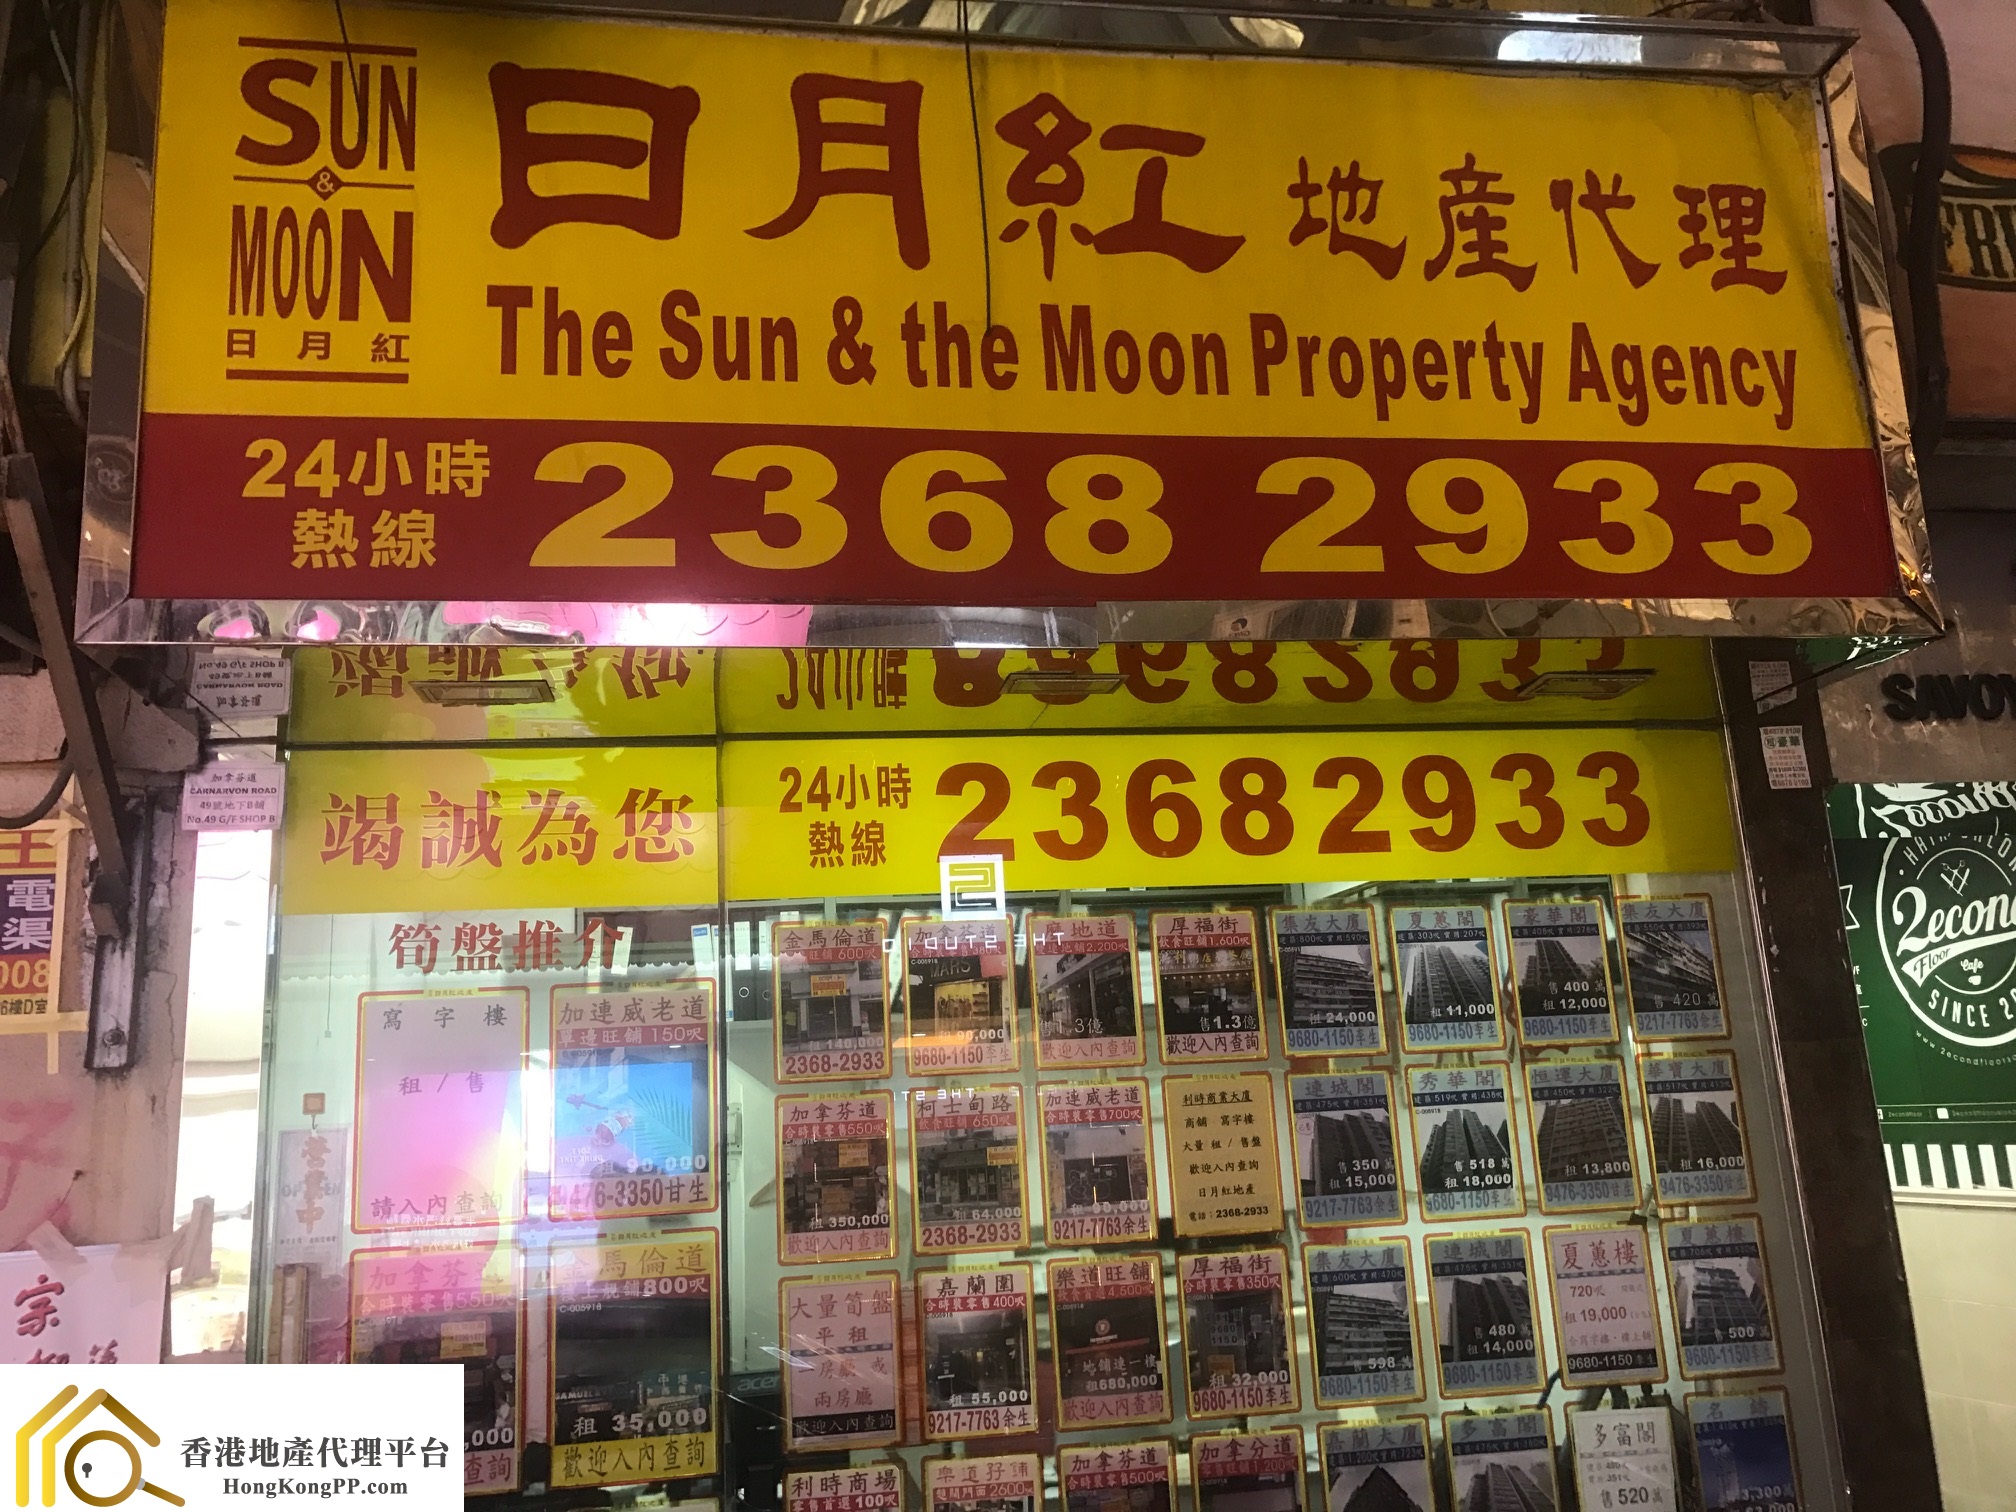 CarparkEstate Agent: 日月紅地產代理 The Sun & the Moon Property Agency